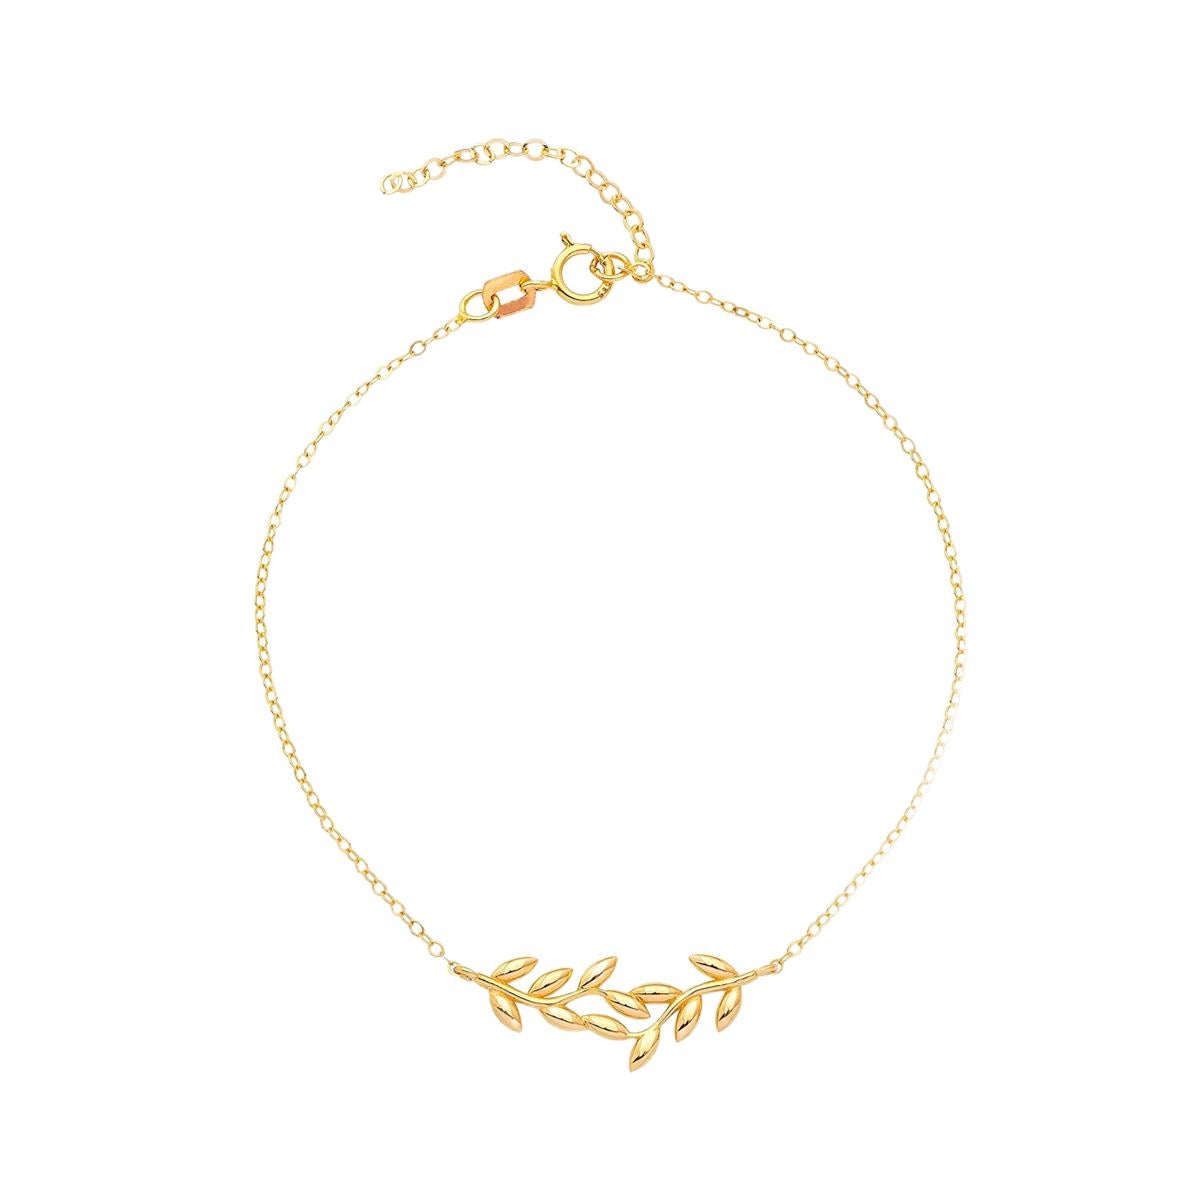 gold necklace and bracelet set women's